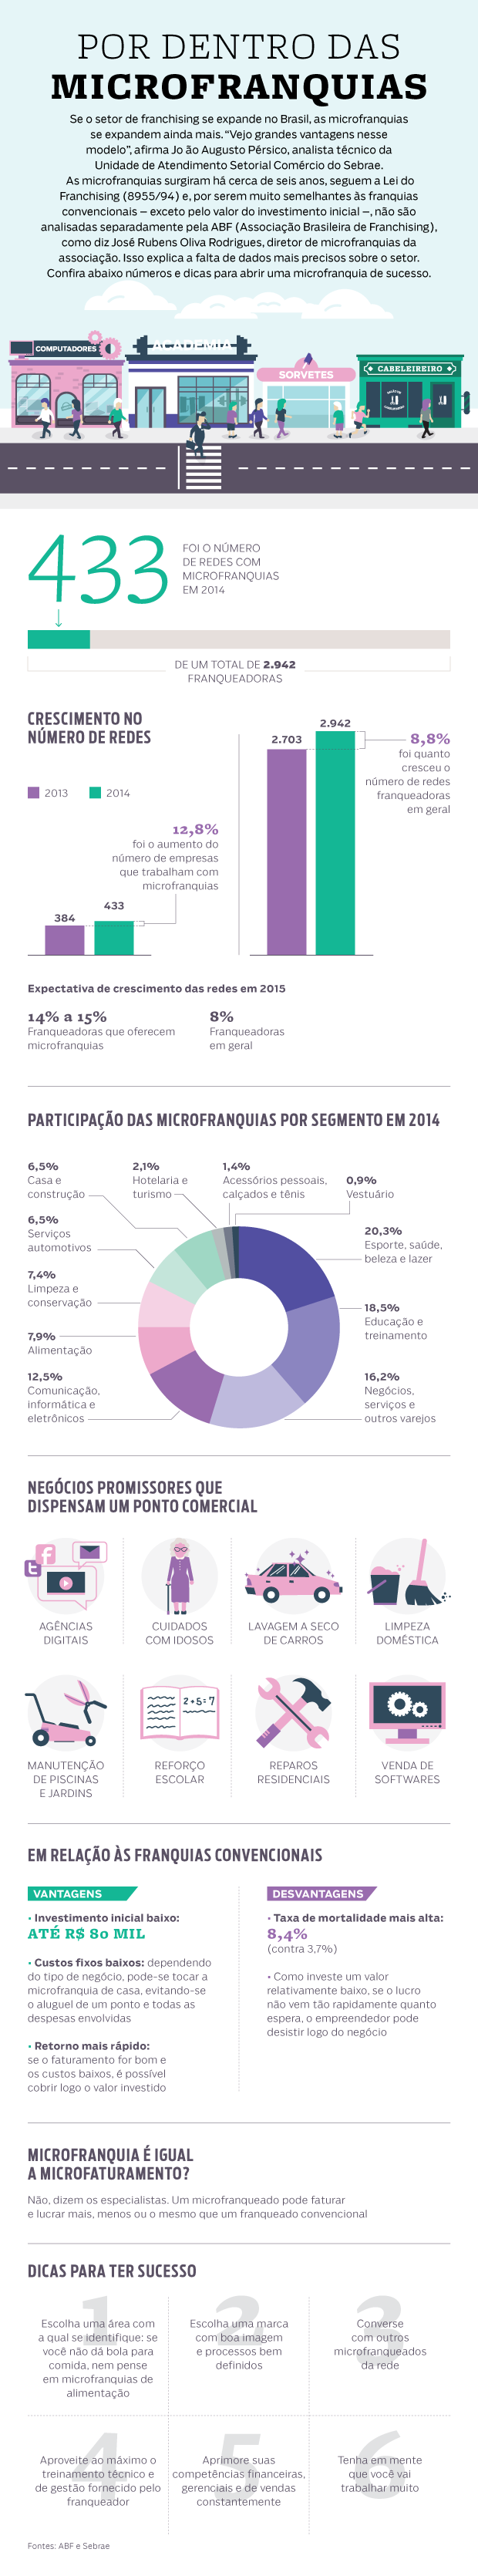 infografico franquias sebrae (Foto: PEGN)